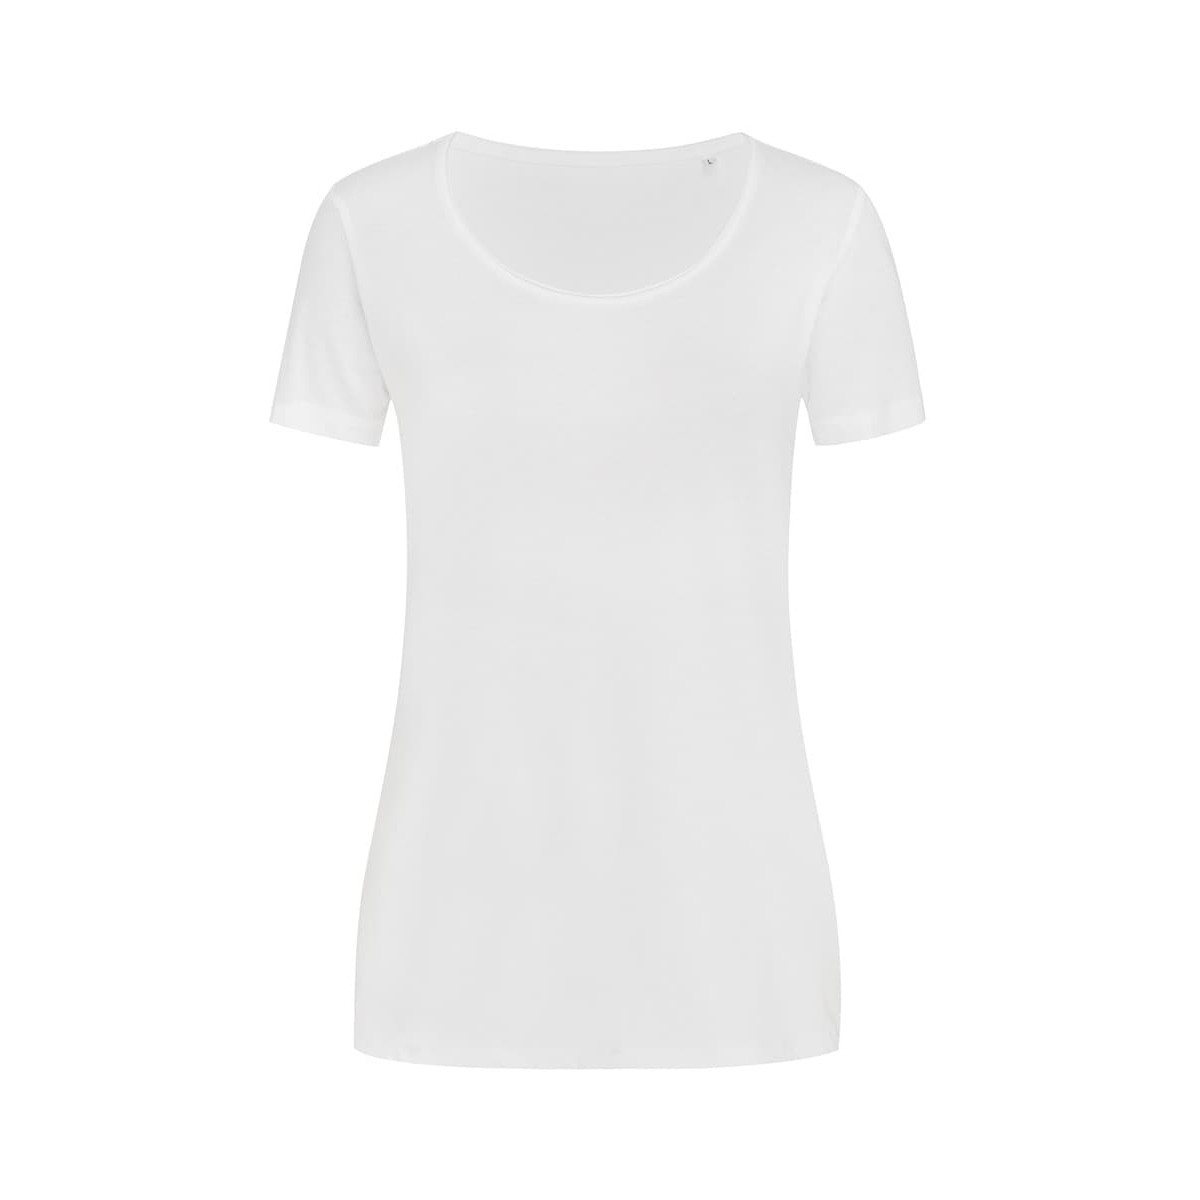 textil Mujer Camisetas manga larga Stedman Stars Finest Blanco